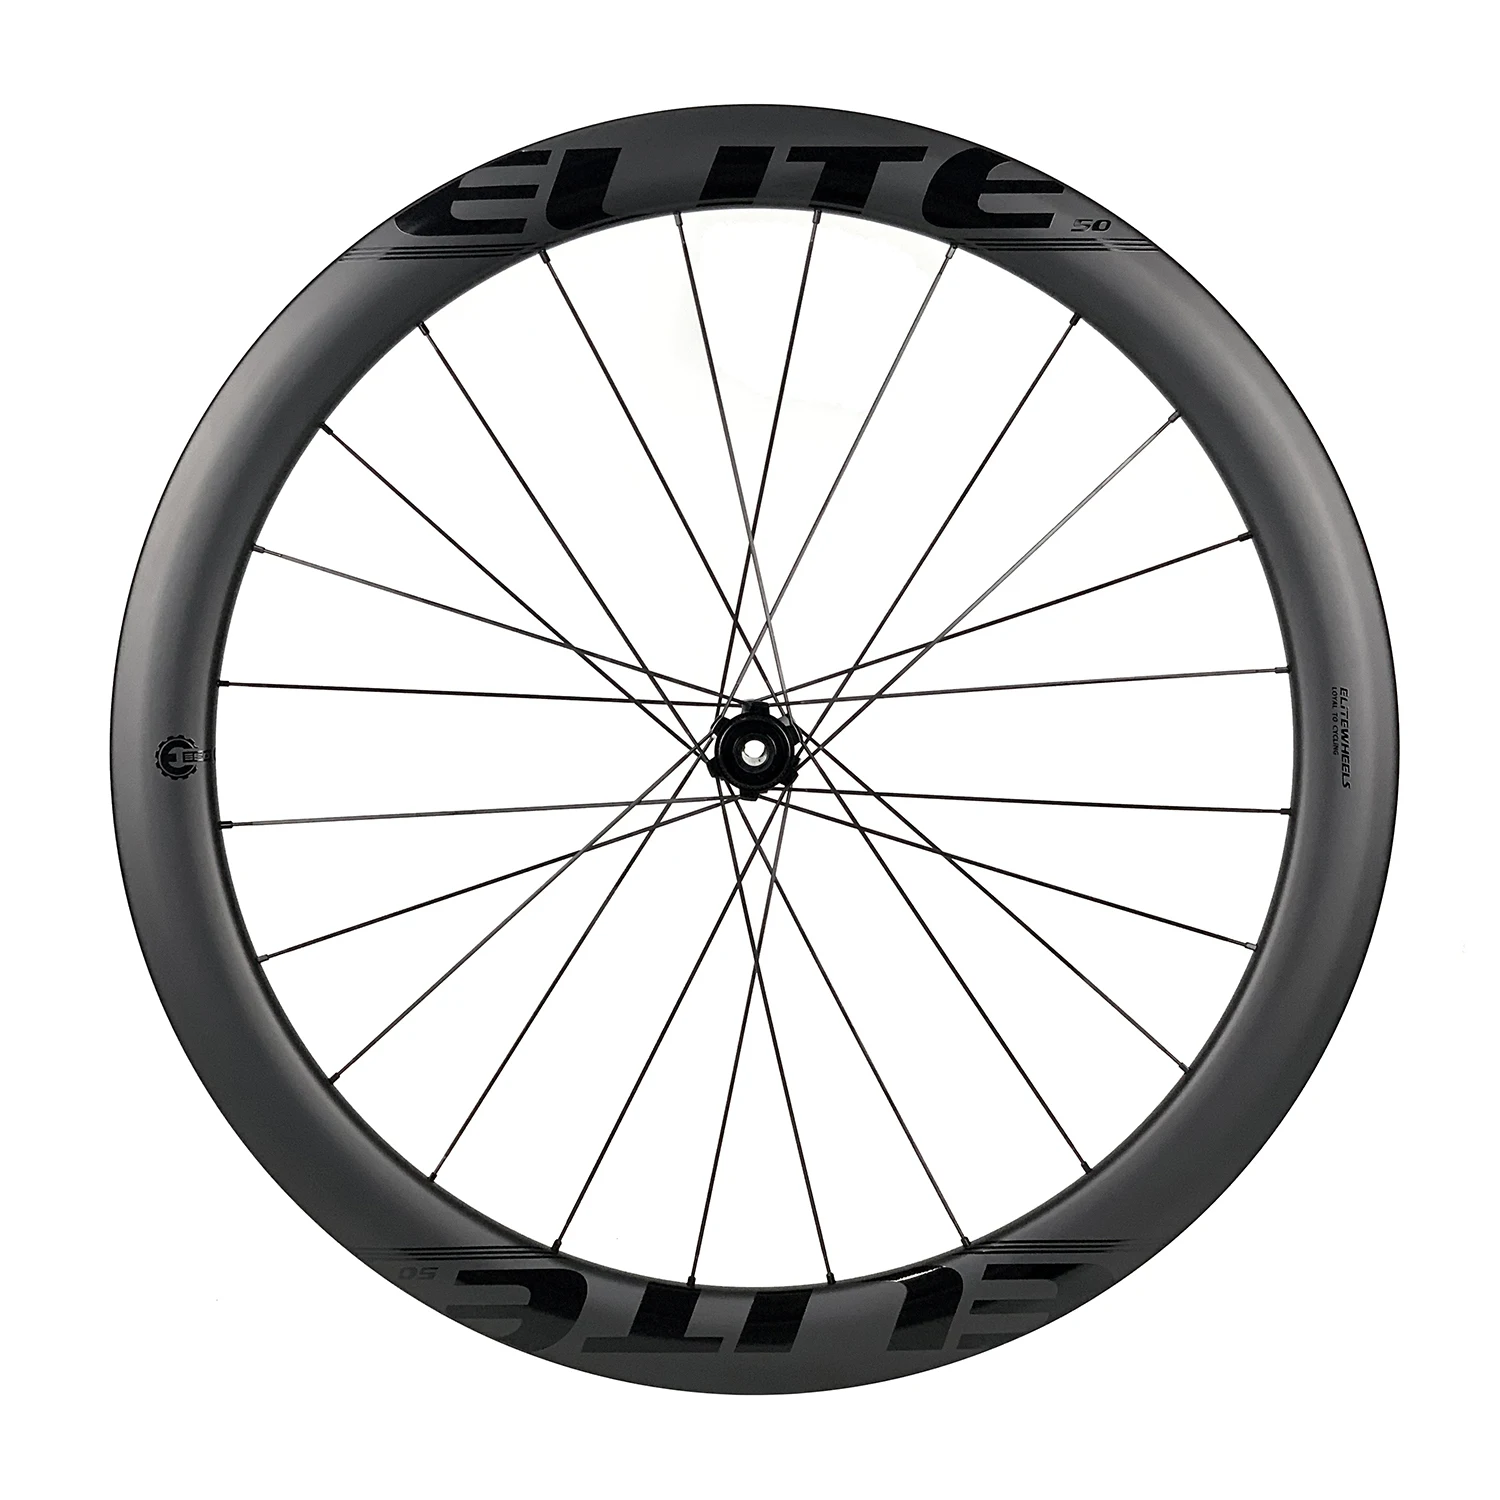 ELITEWHEELS Carbon Wheels Disc Brake 700c Road Bike Wheelset ENT Quality  Carbon Rim With Center Lock Or 6-bolt Lock Road Cycling